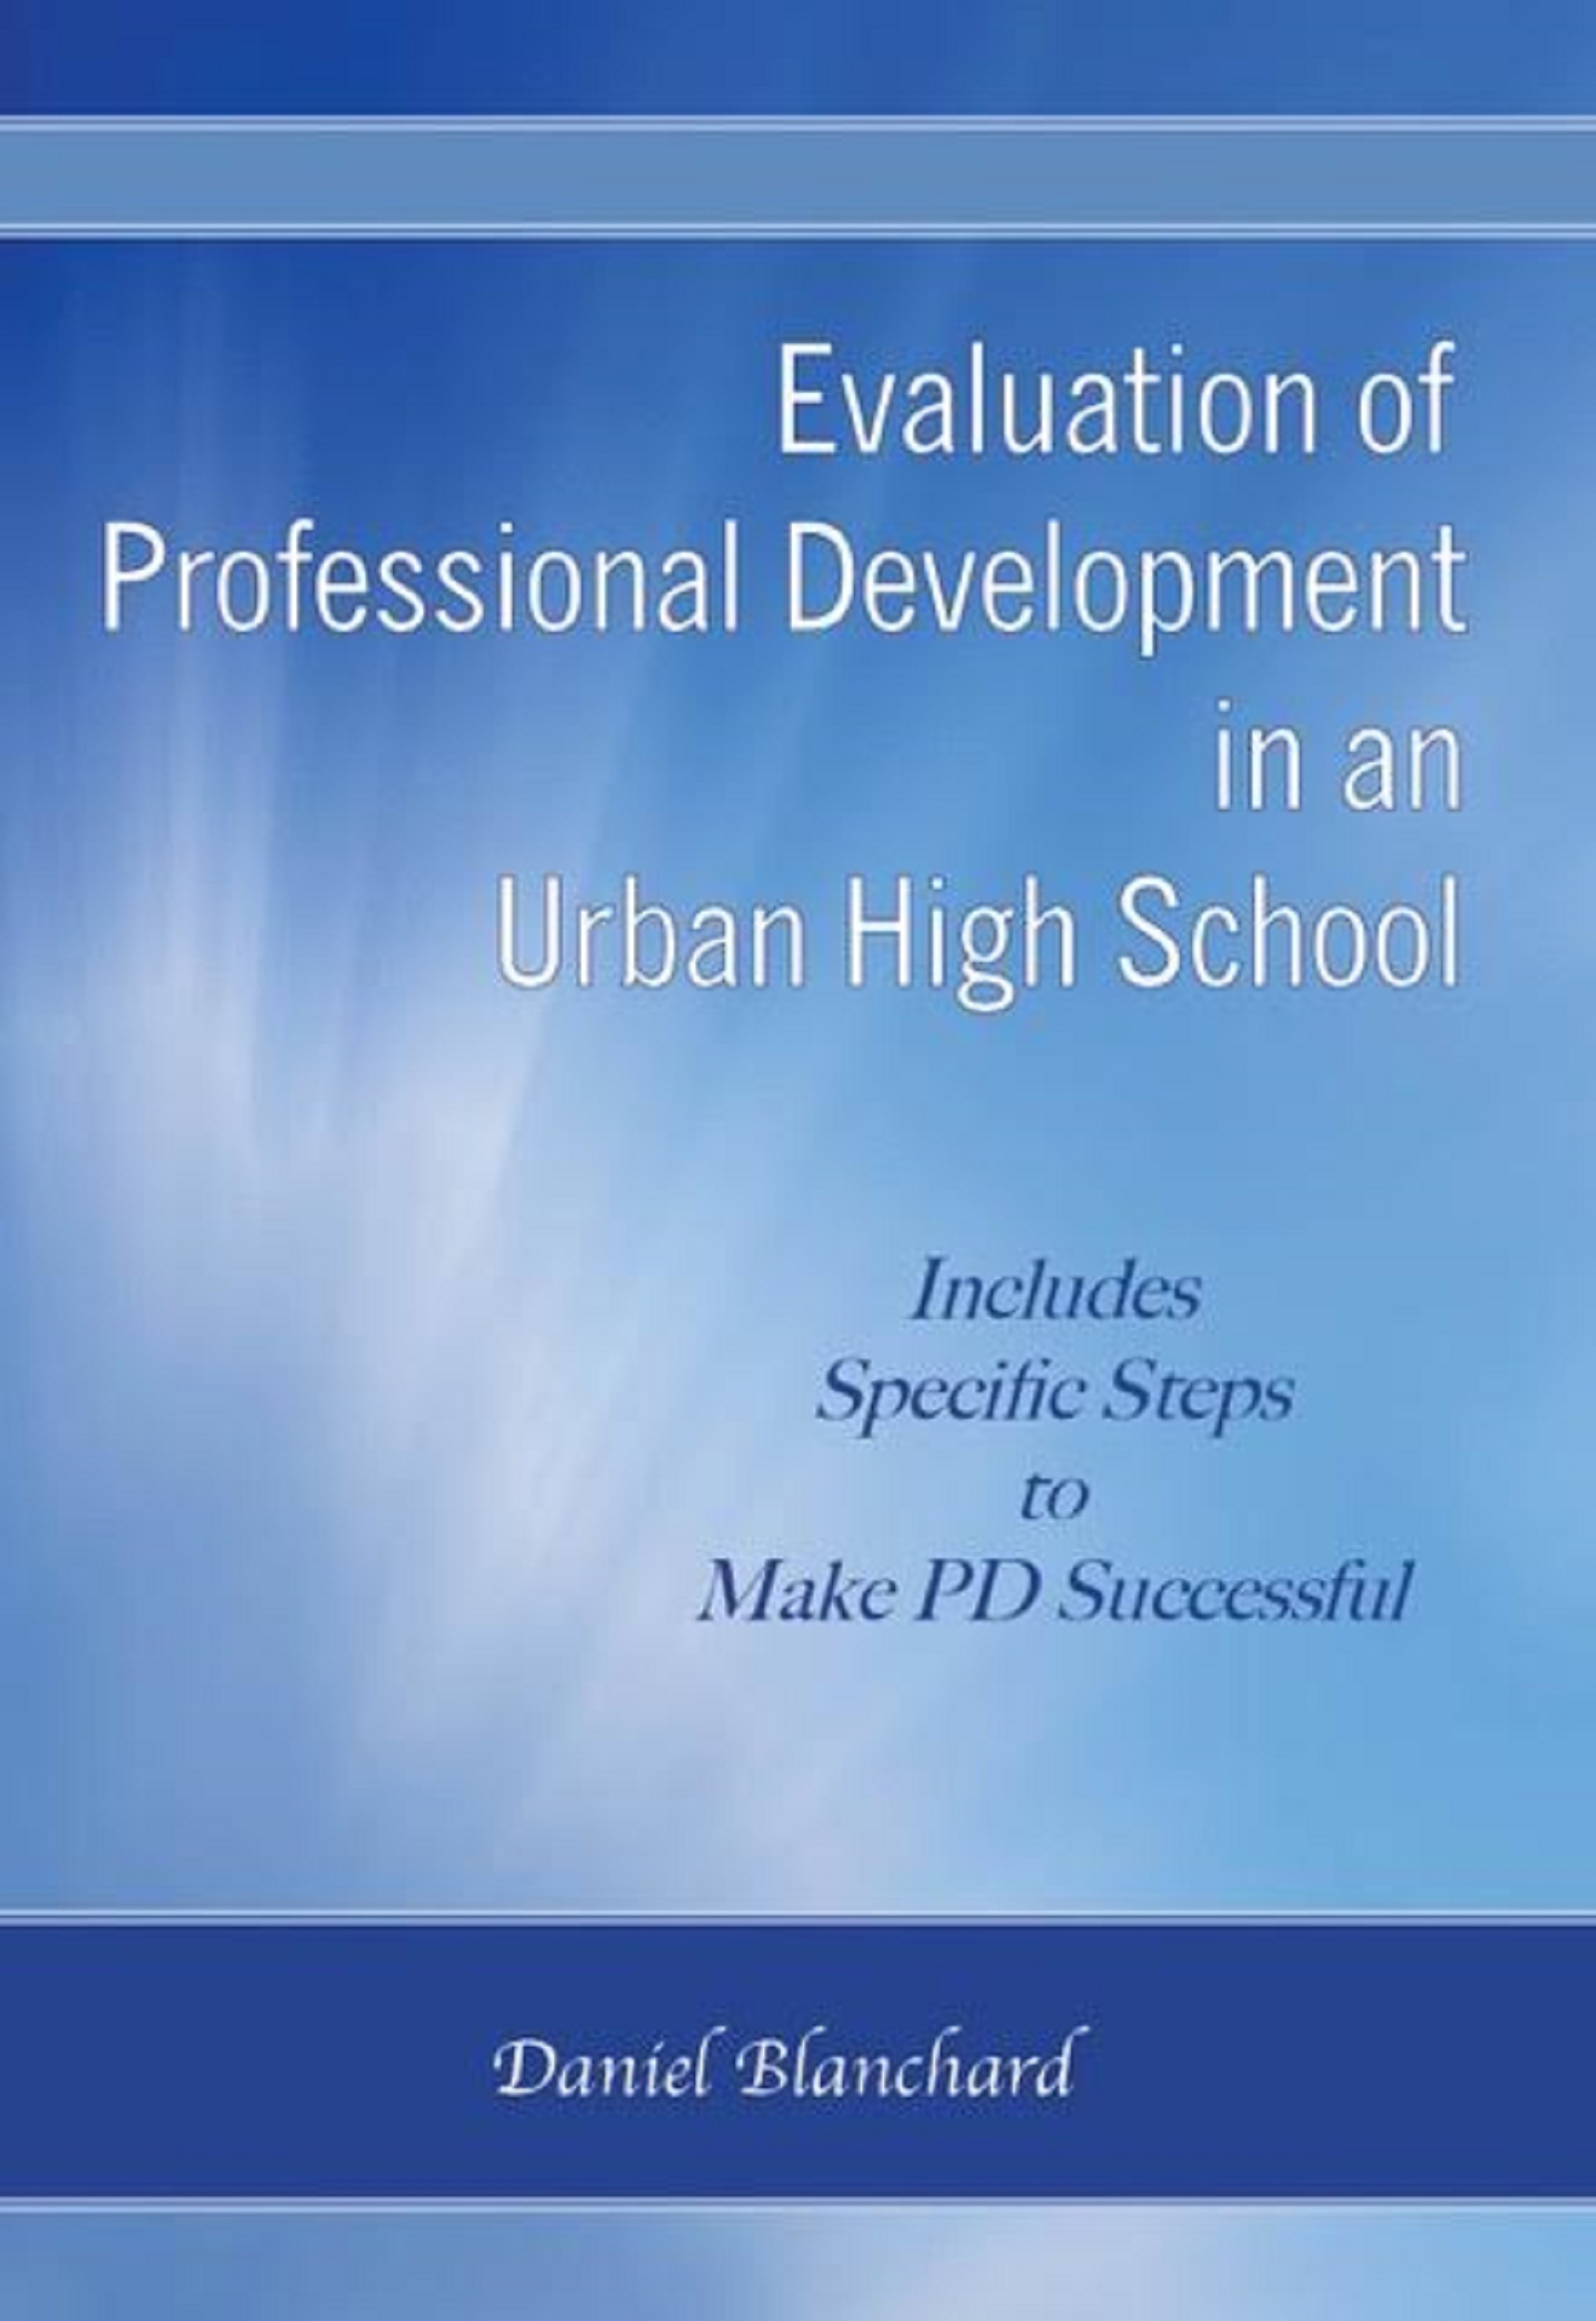 FREE: Evaluation of Professional Development in an Urban High School by Daniel Blanchard